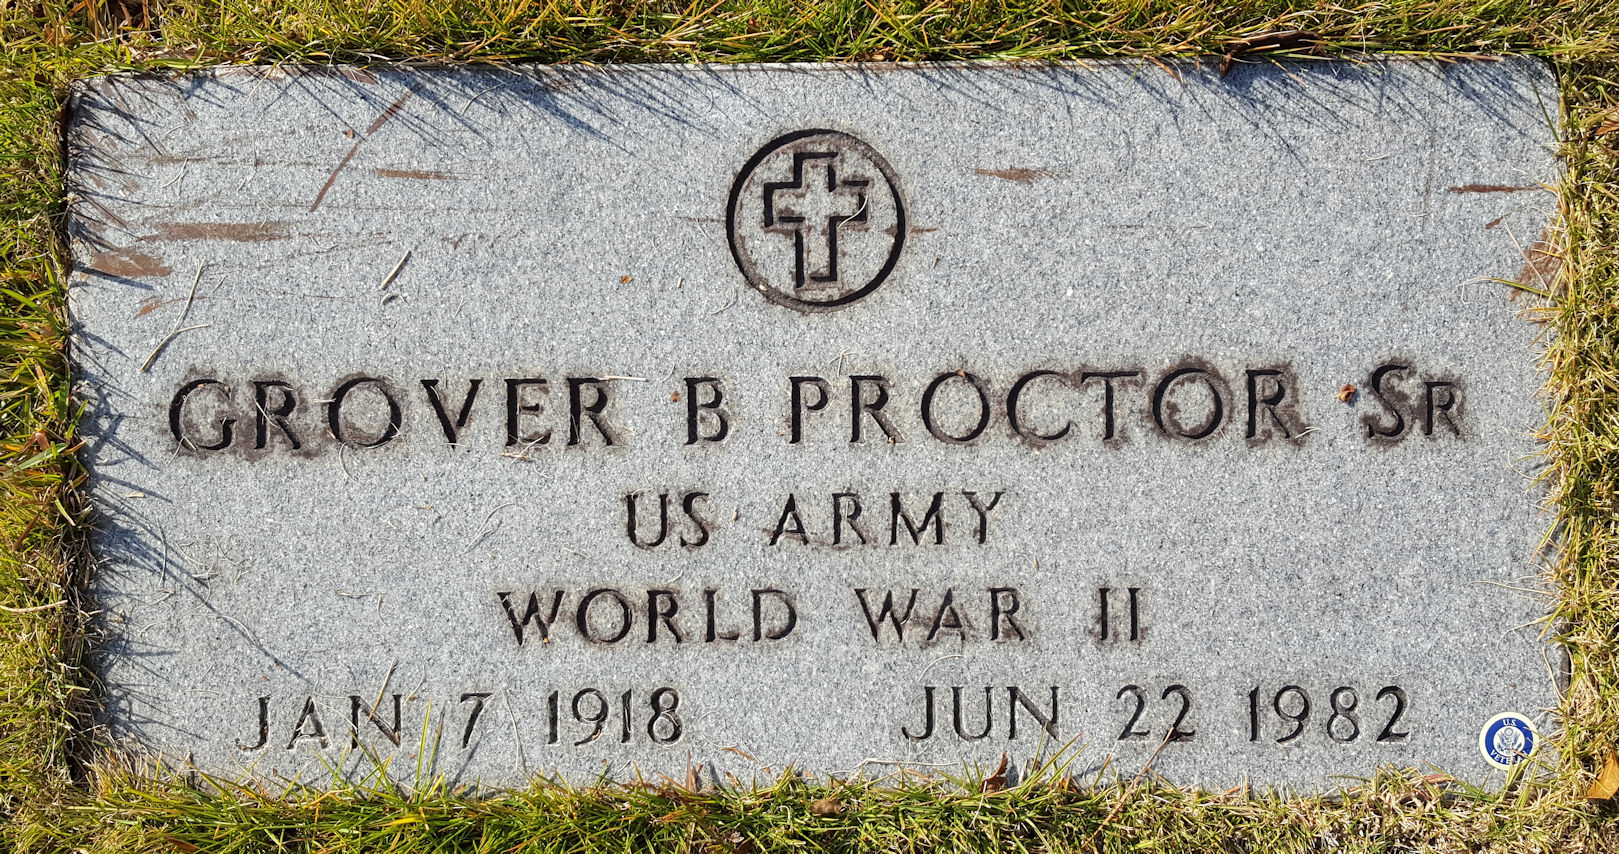 Grover B. Proctor (1918-1982)